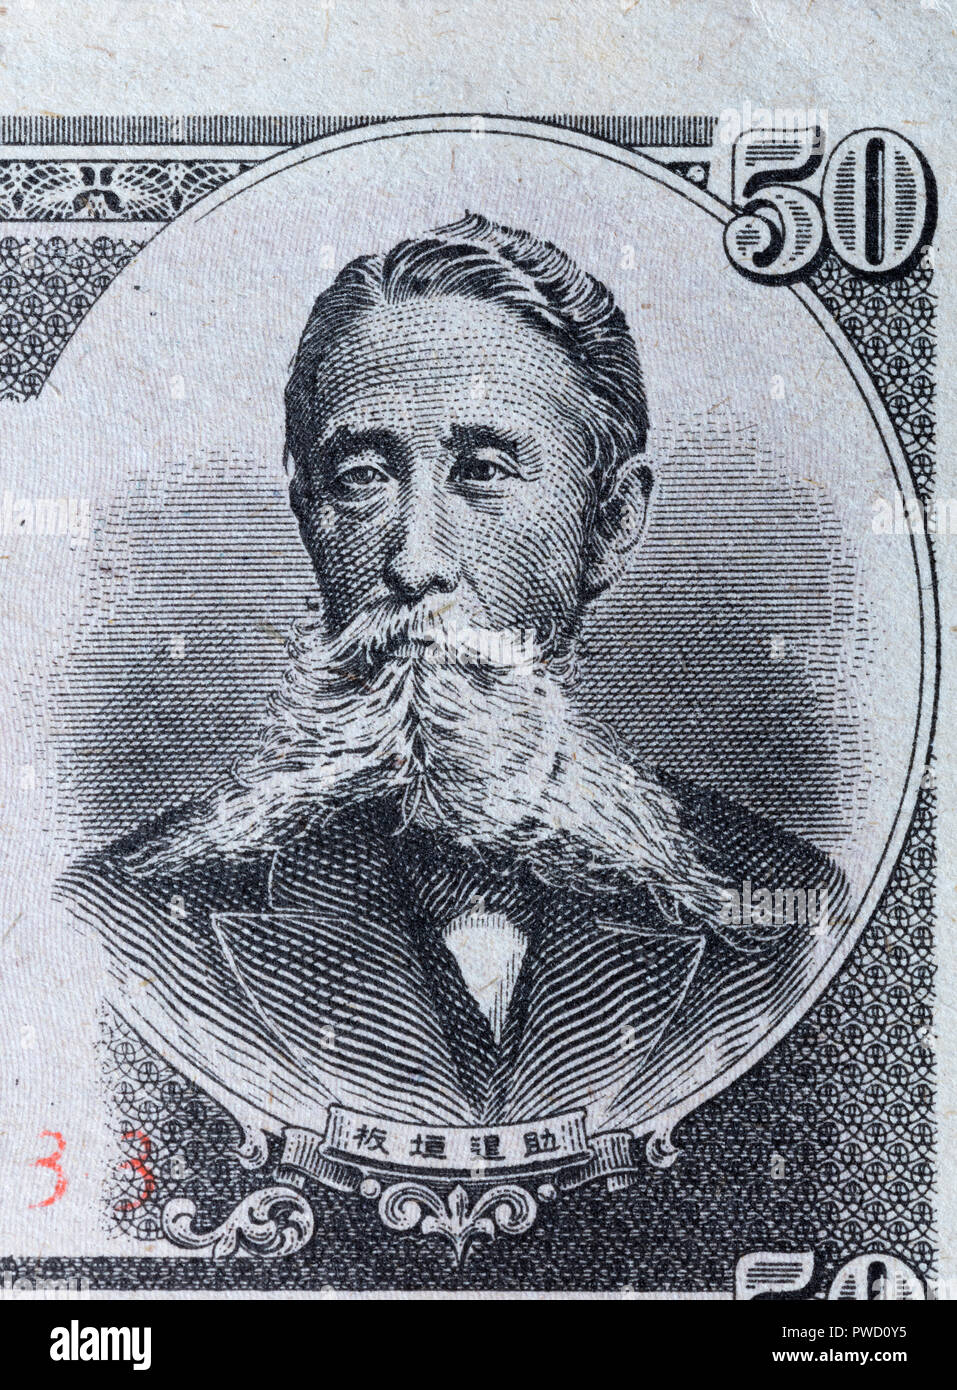 Portrait of Itagaki Taisuke from 50 sen banknote, Japan, 1948 Stock Photo